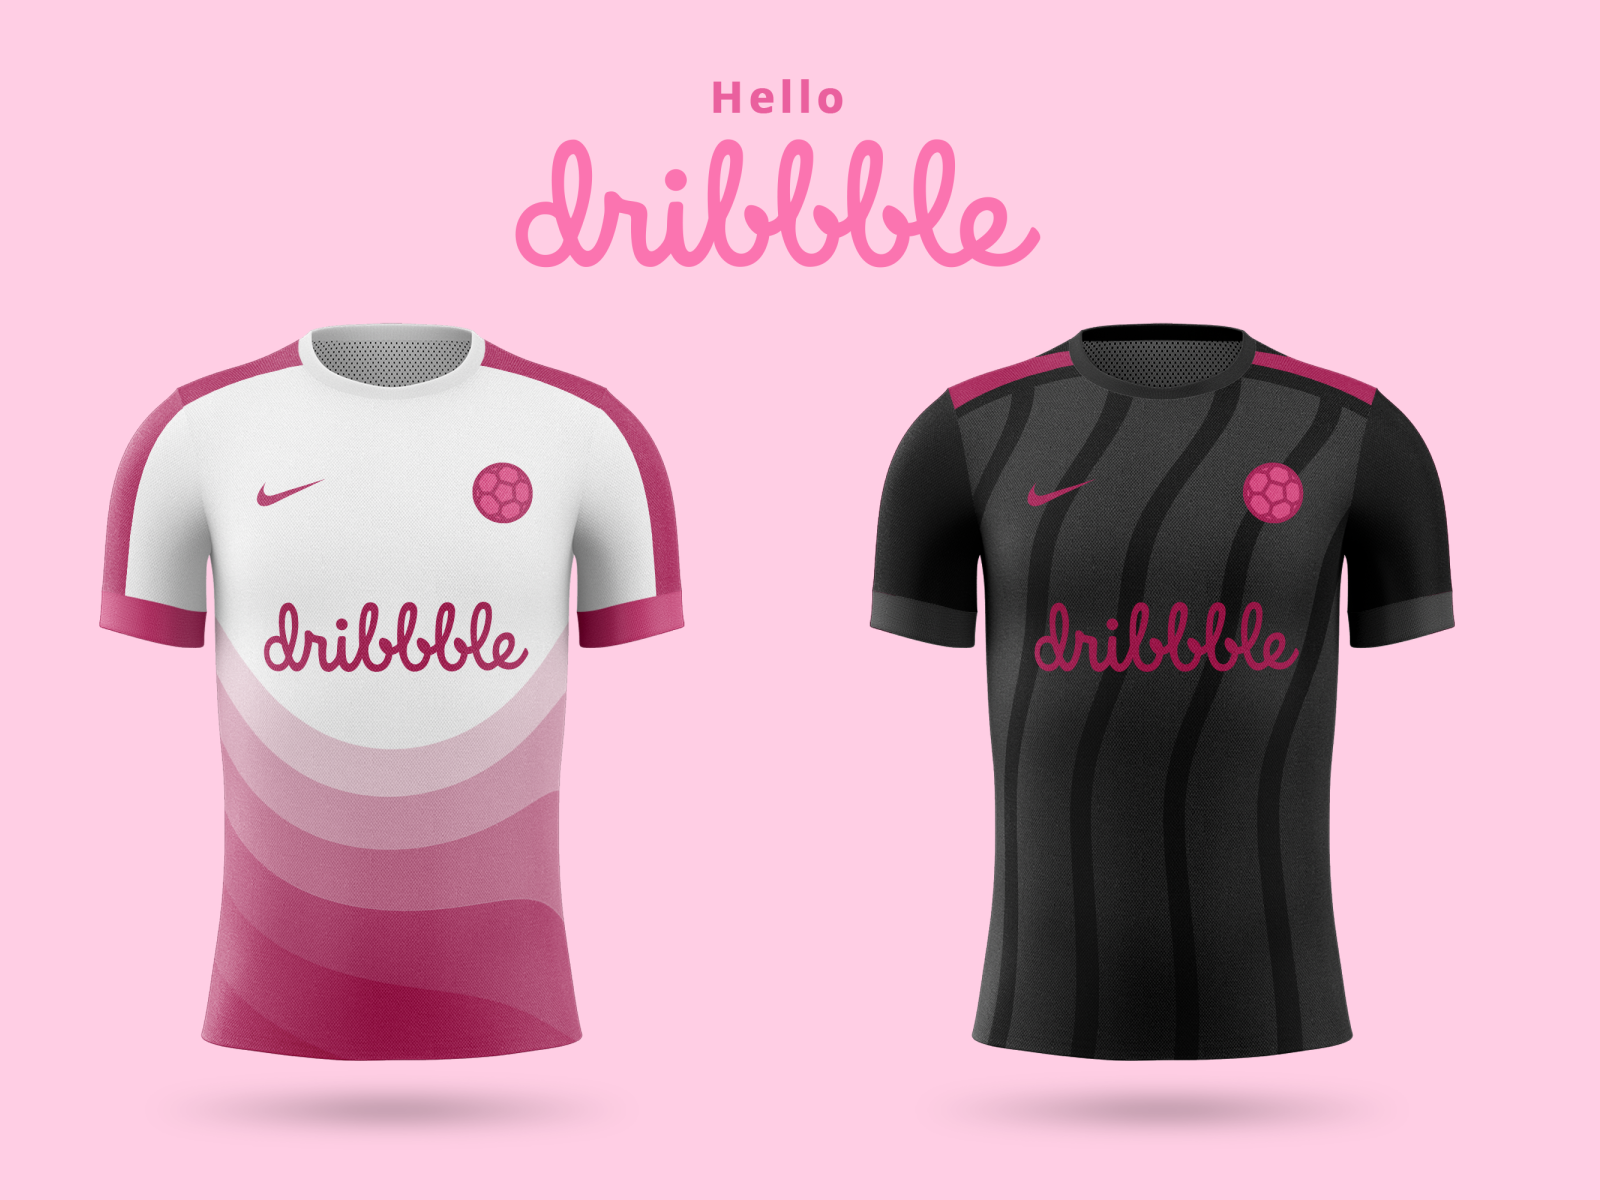 soccer uniform design